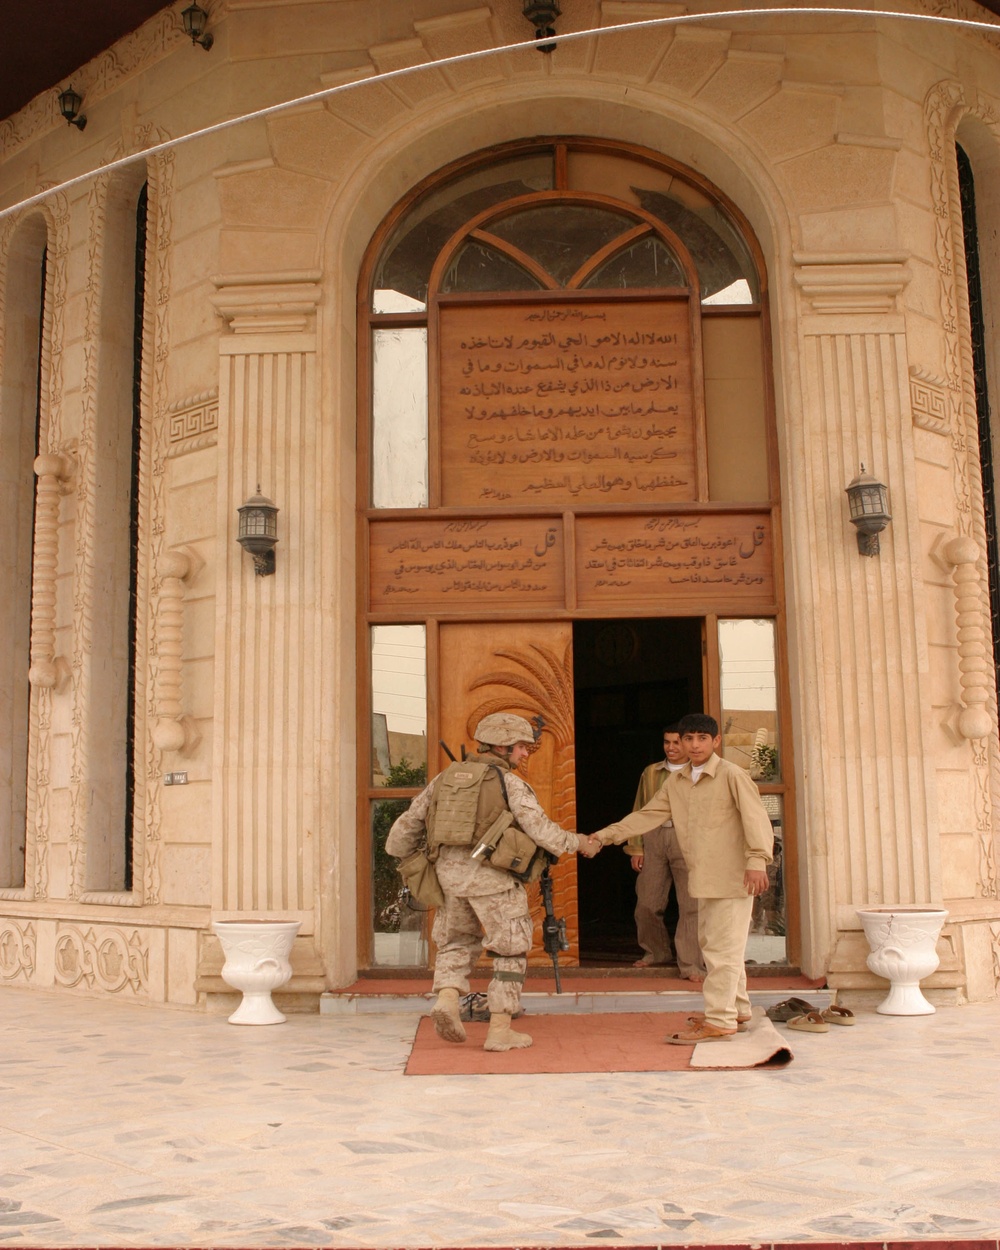 Echo Company 2/5 Marines conduct Presence patrol in Al Hawz